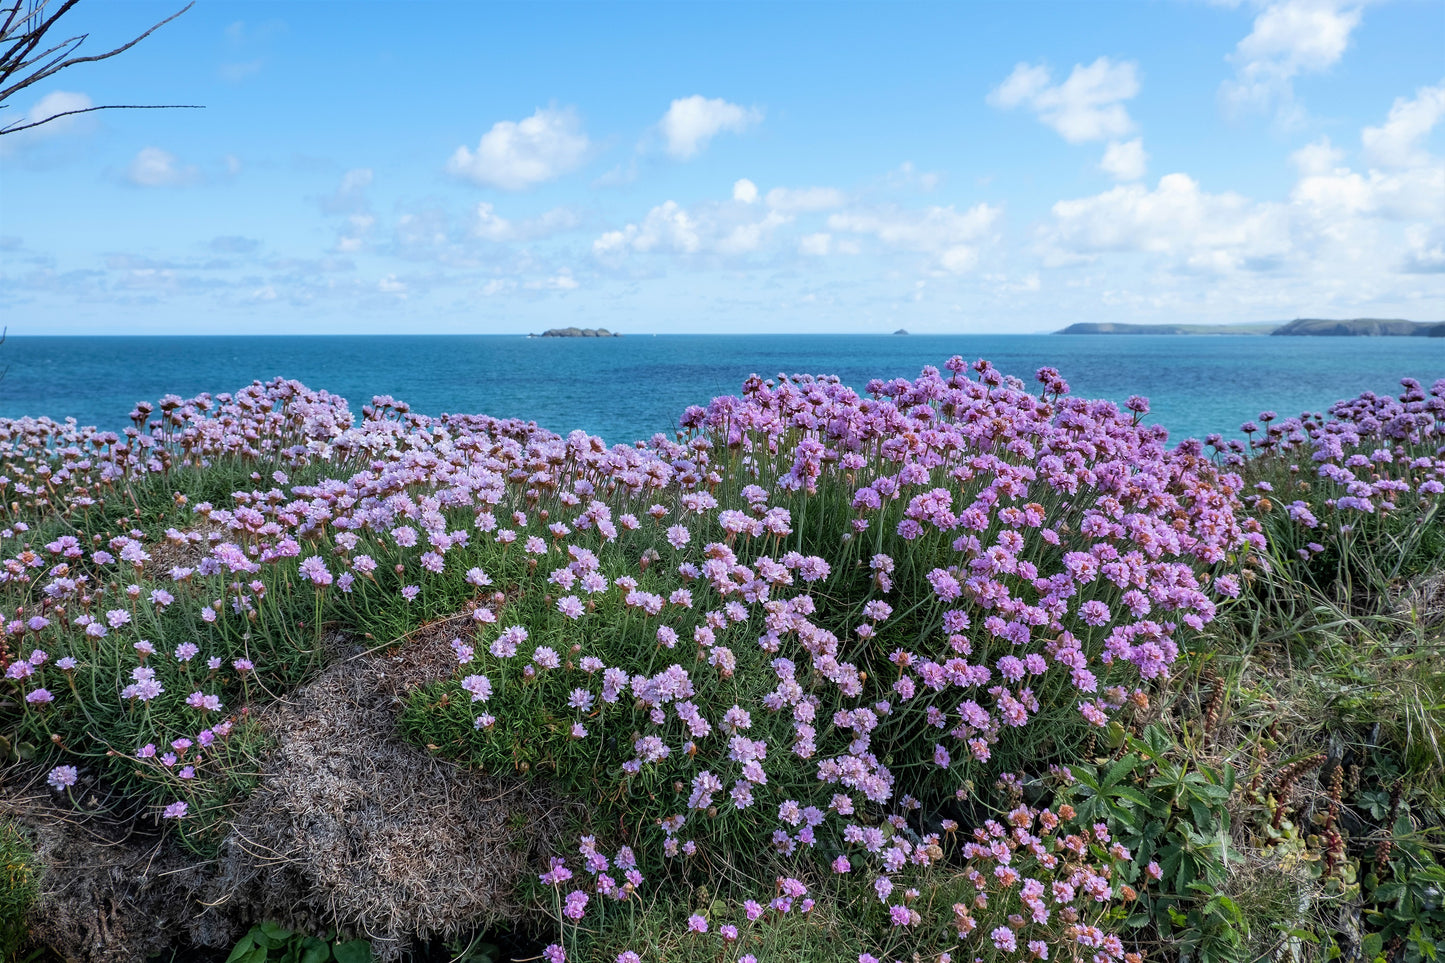 50 SEA THRIFT Armeria Maritima California Sea Pink Cliff Rose Cushion Pink Lavender Native Maritime Flower Seeds